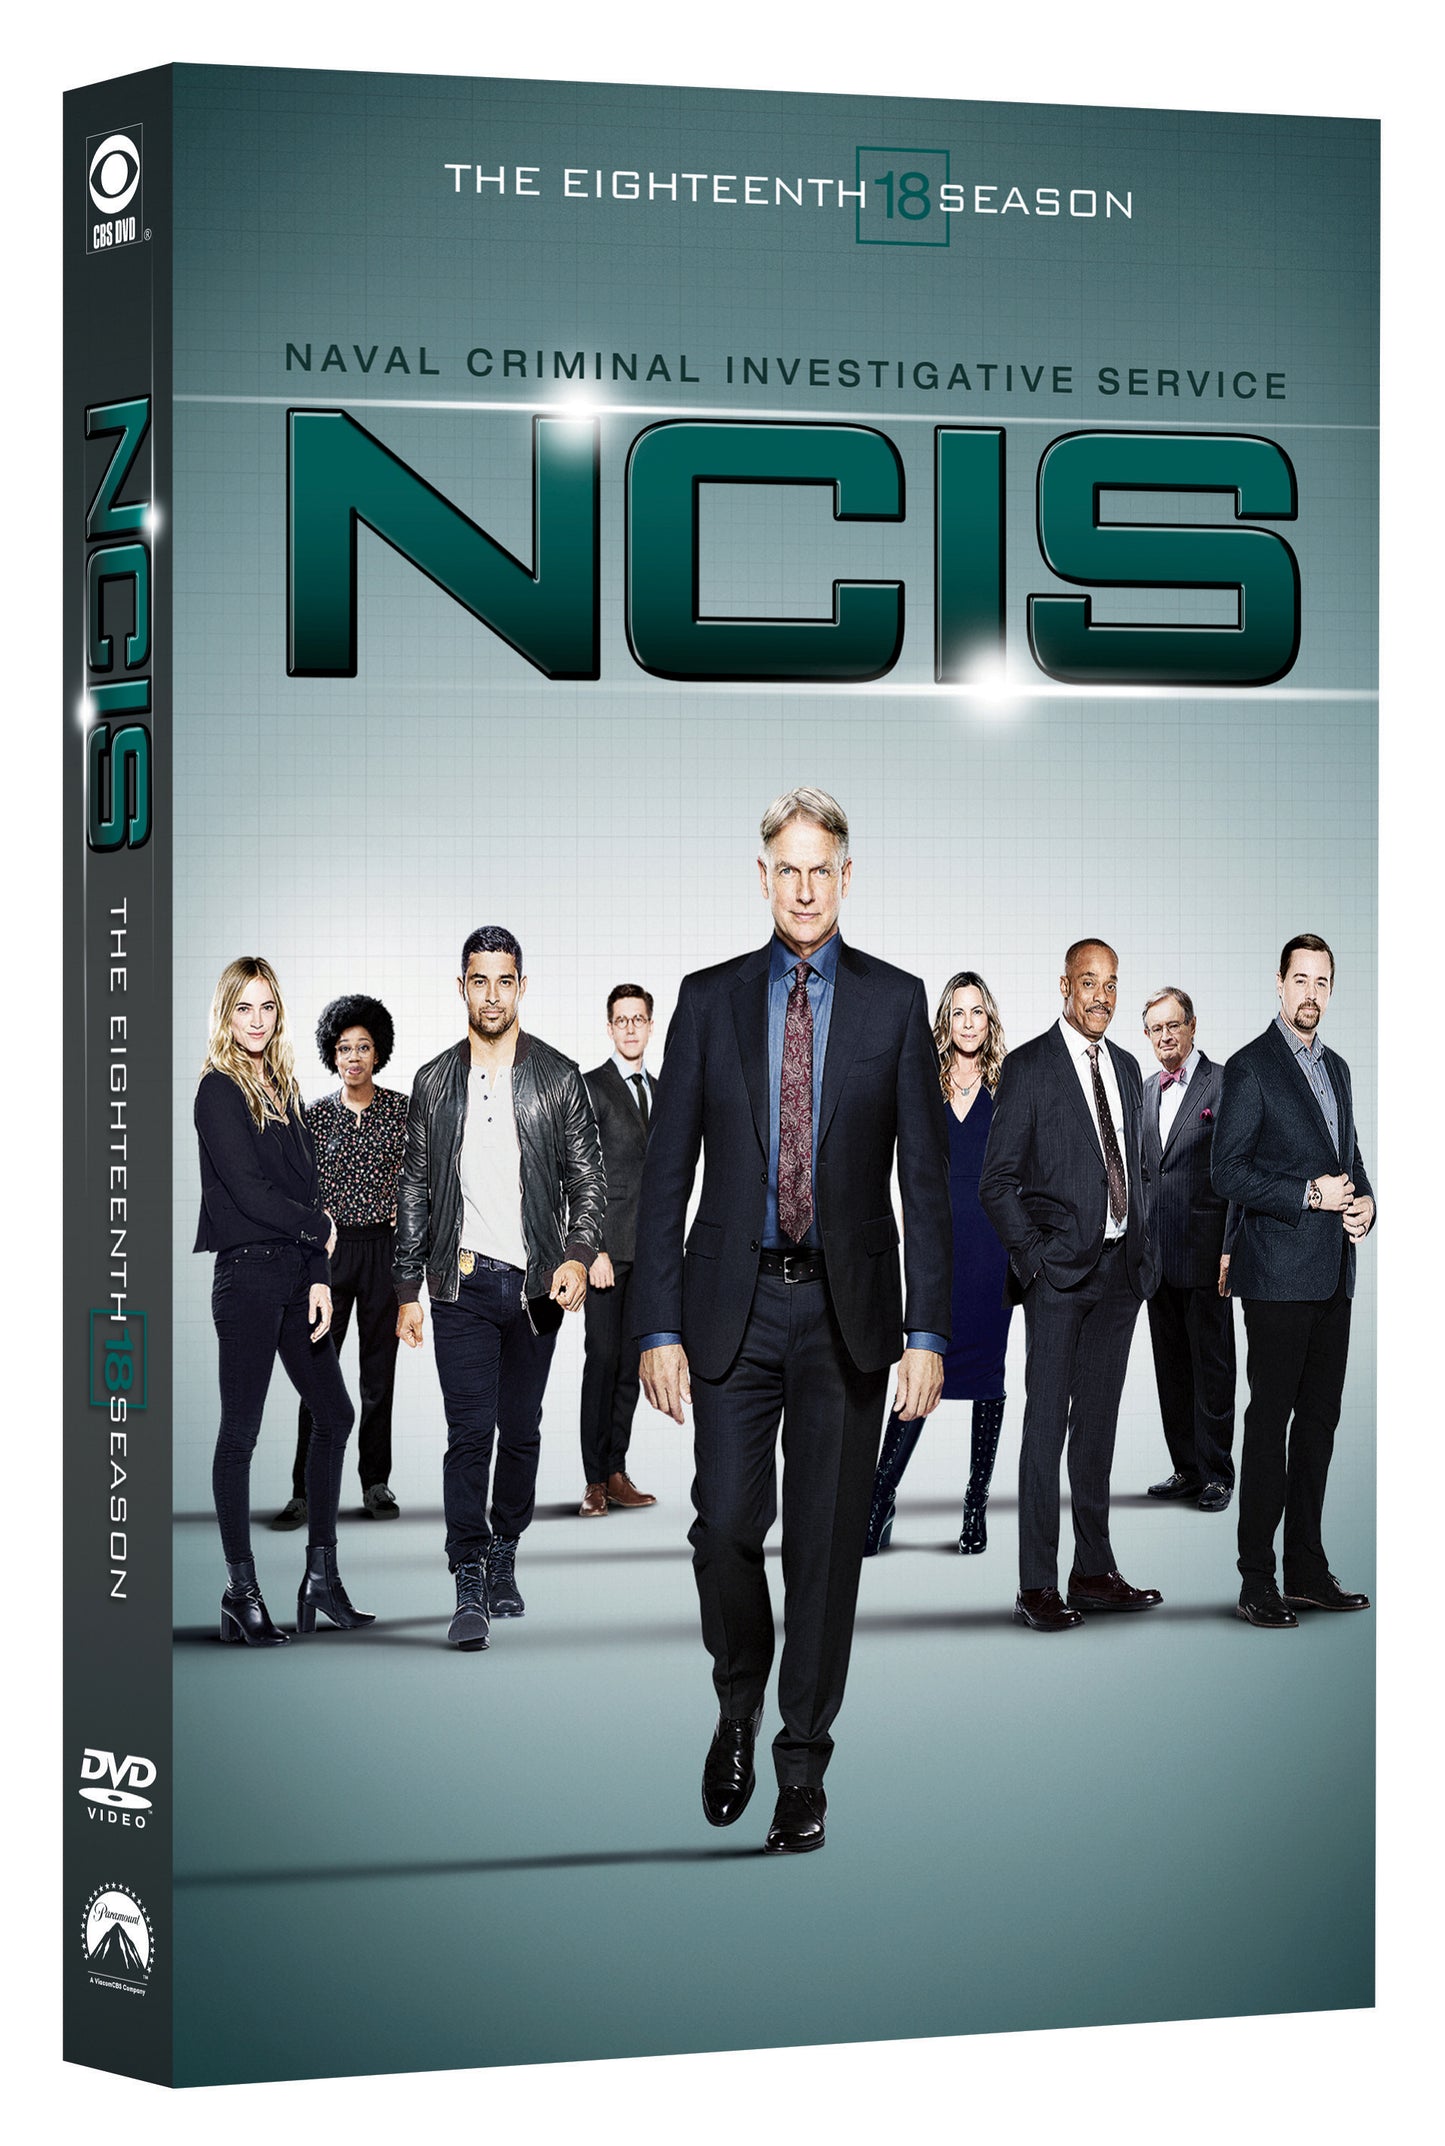 NCIS: The Eighteenth Season cover art